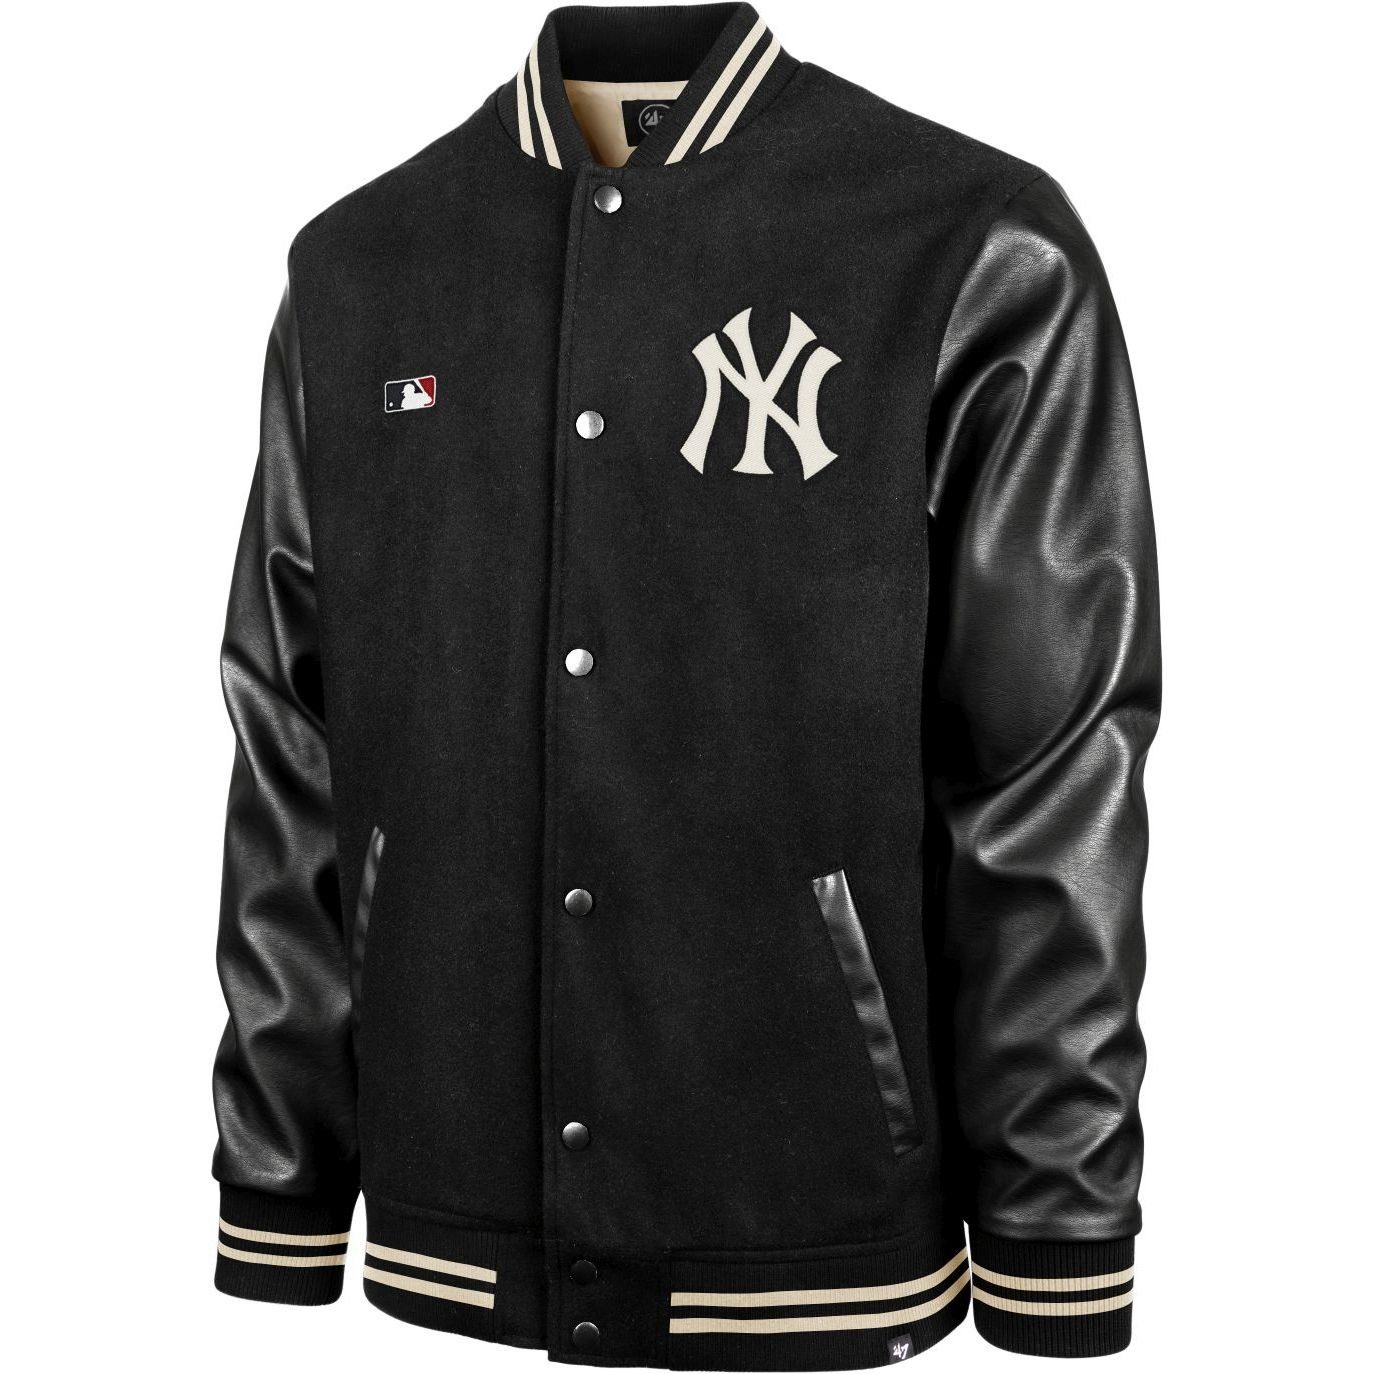 x27;47 Brand Yankees HOXTON College York New Collegejacke